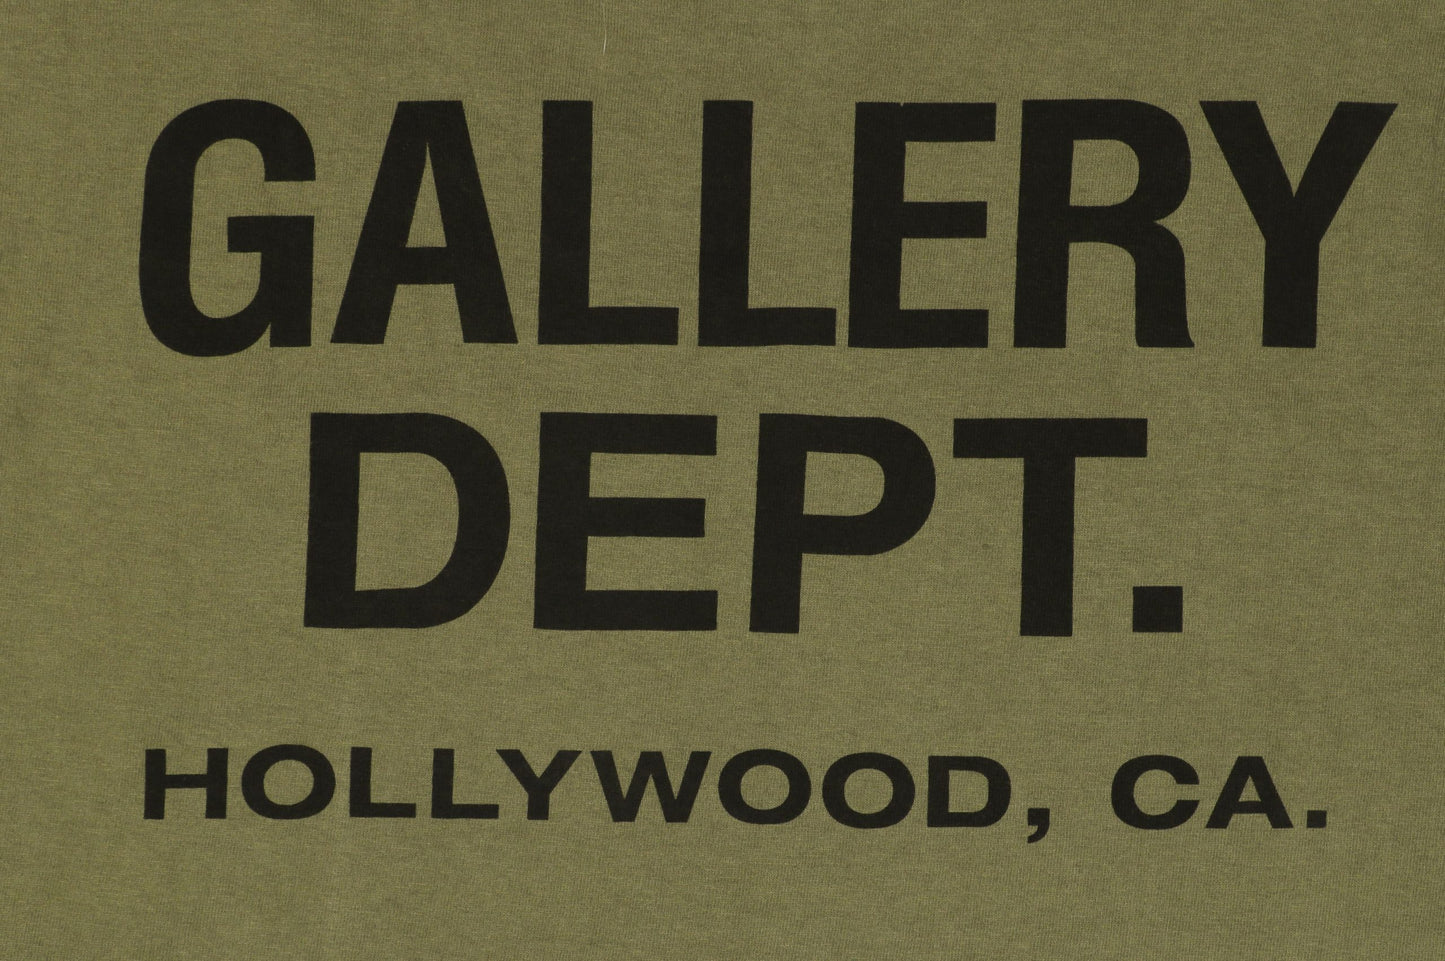 Gallery Dept Vintage Souvenir Khaki T-Shirt